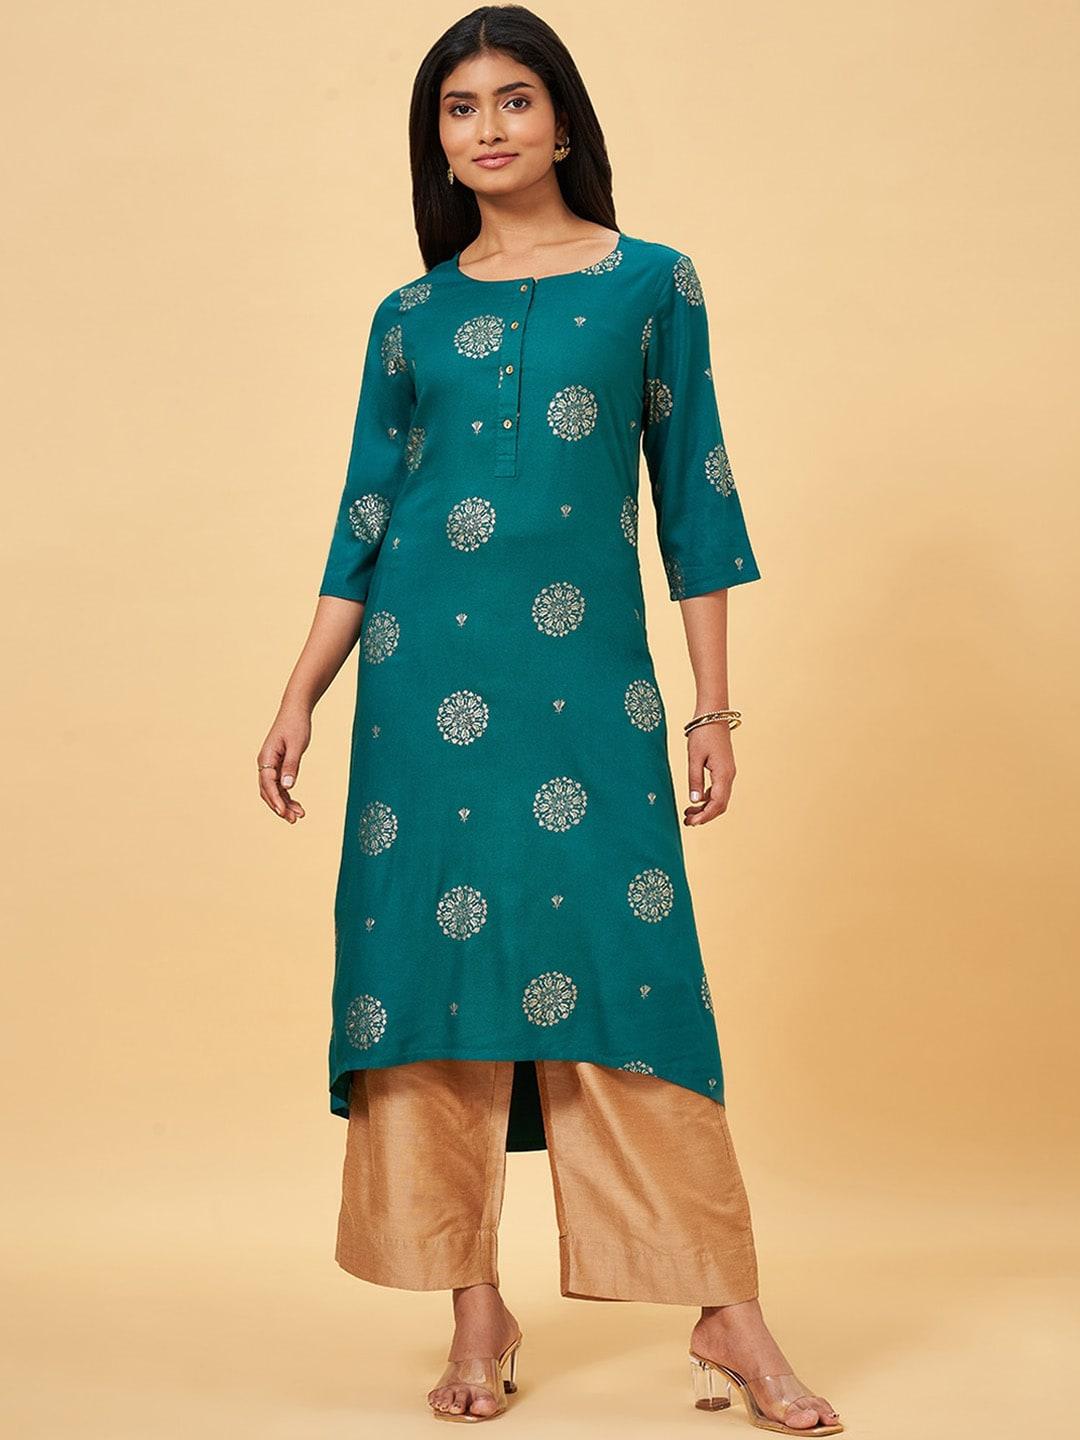 rangmanch by pantaloons women ethnic motifs printed keyhole neck flared sleeves thread work kurta